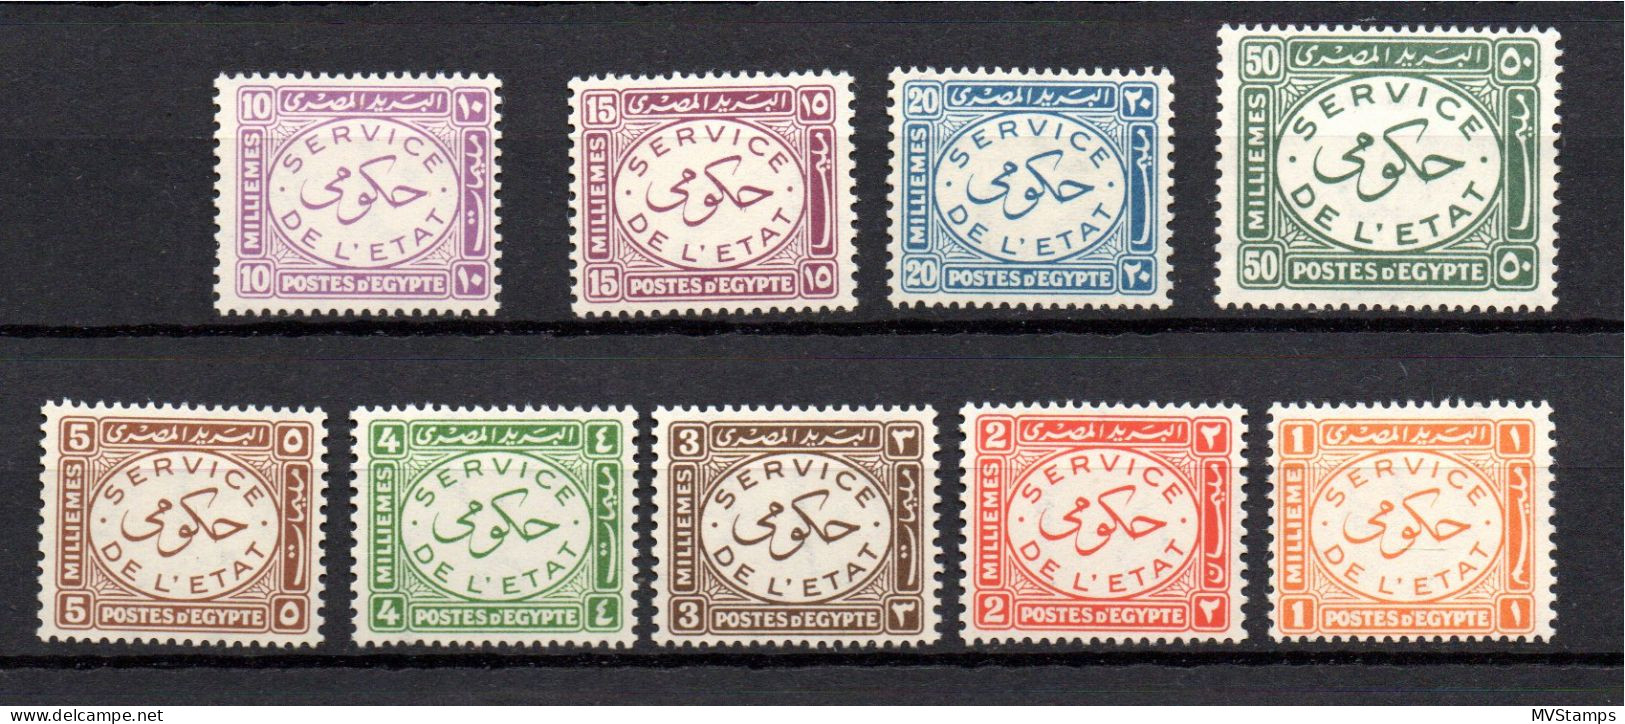 Egypt 1938 Old Set Sevice/Dienst Stamps (Michel D 51/59) Nice MNH - Service